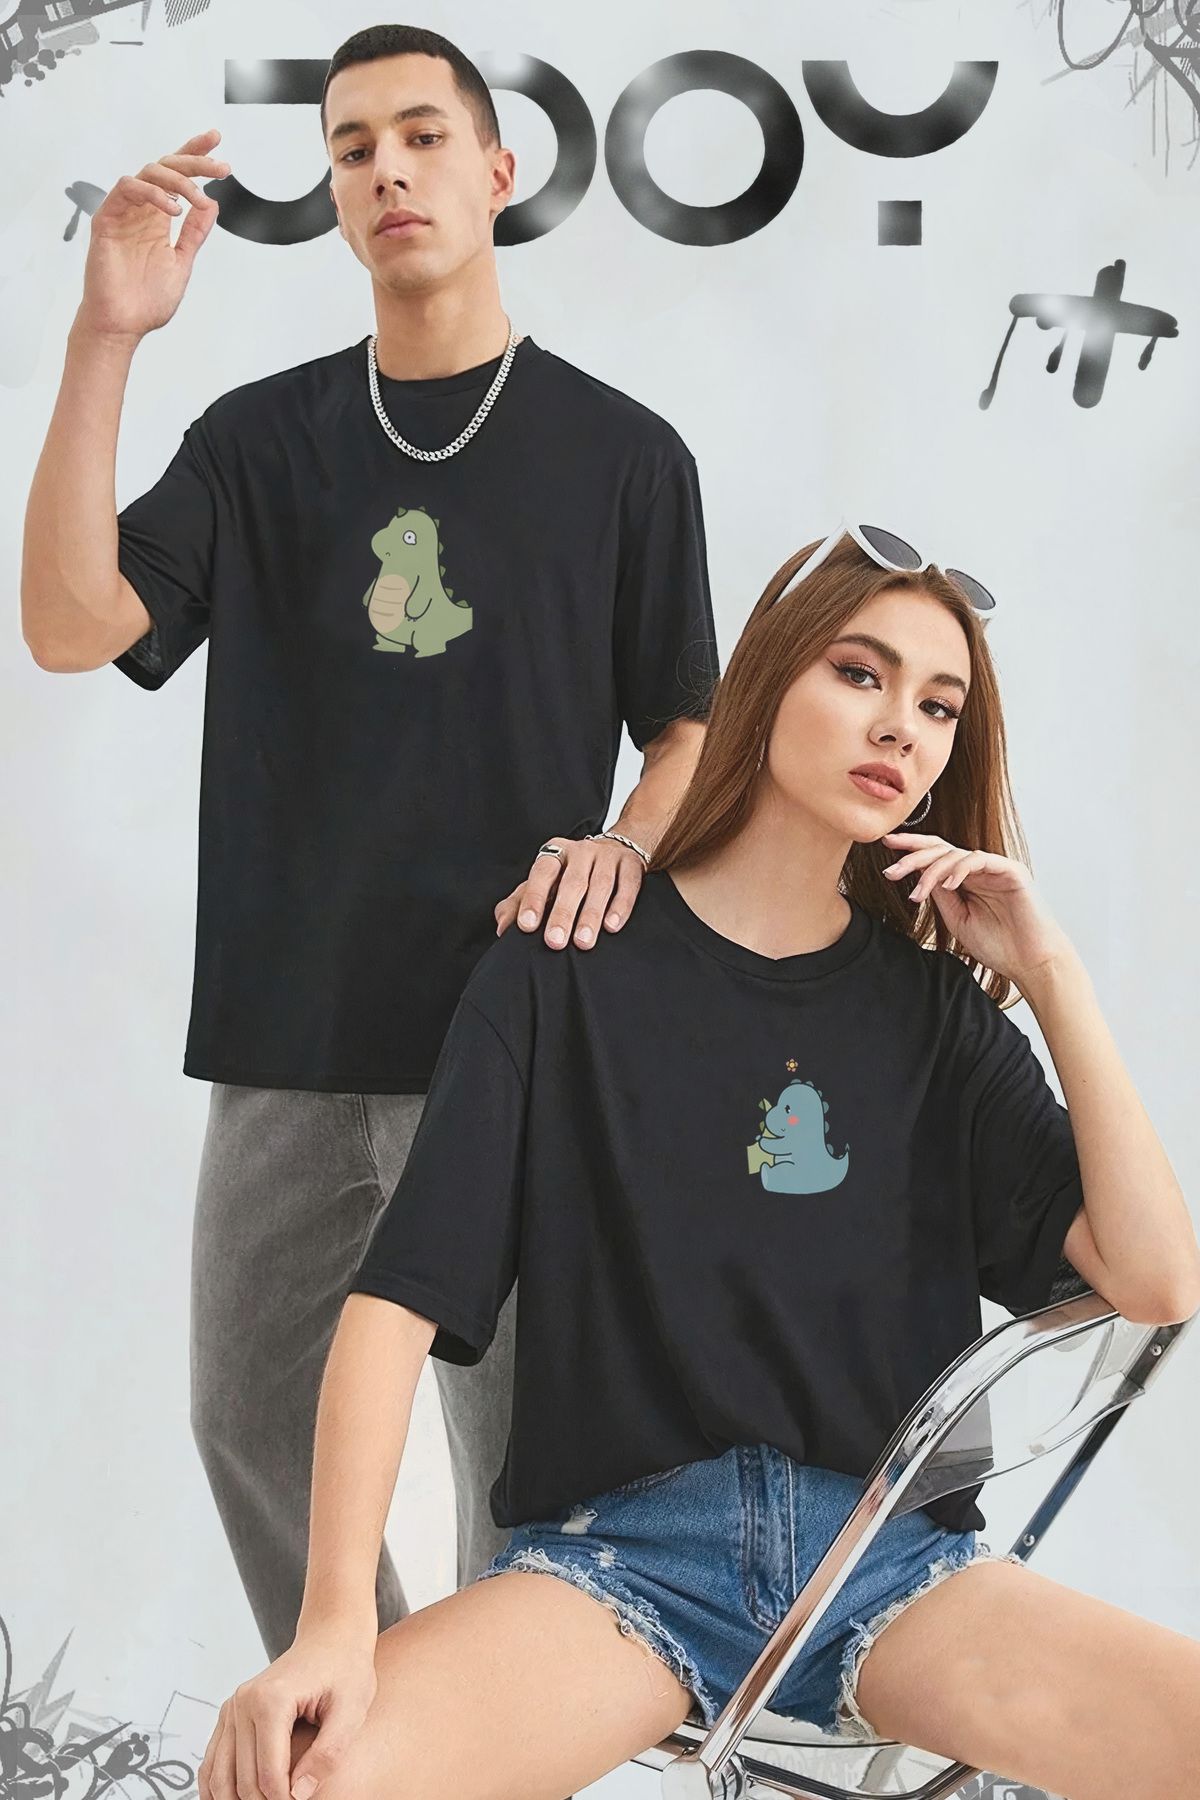 Jooy Company Sevimli Dinazor Tasarım Çift Kombini Siyah Oversize Tshirt 2'li Set